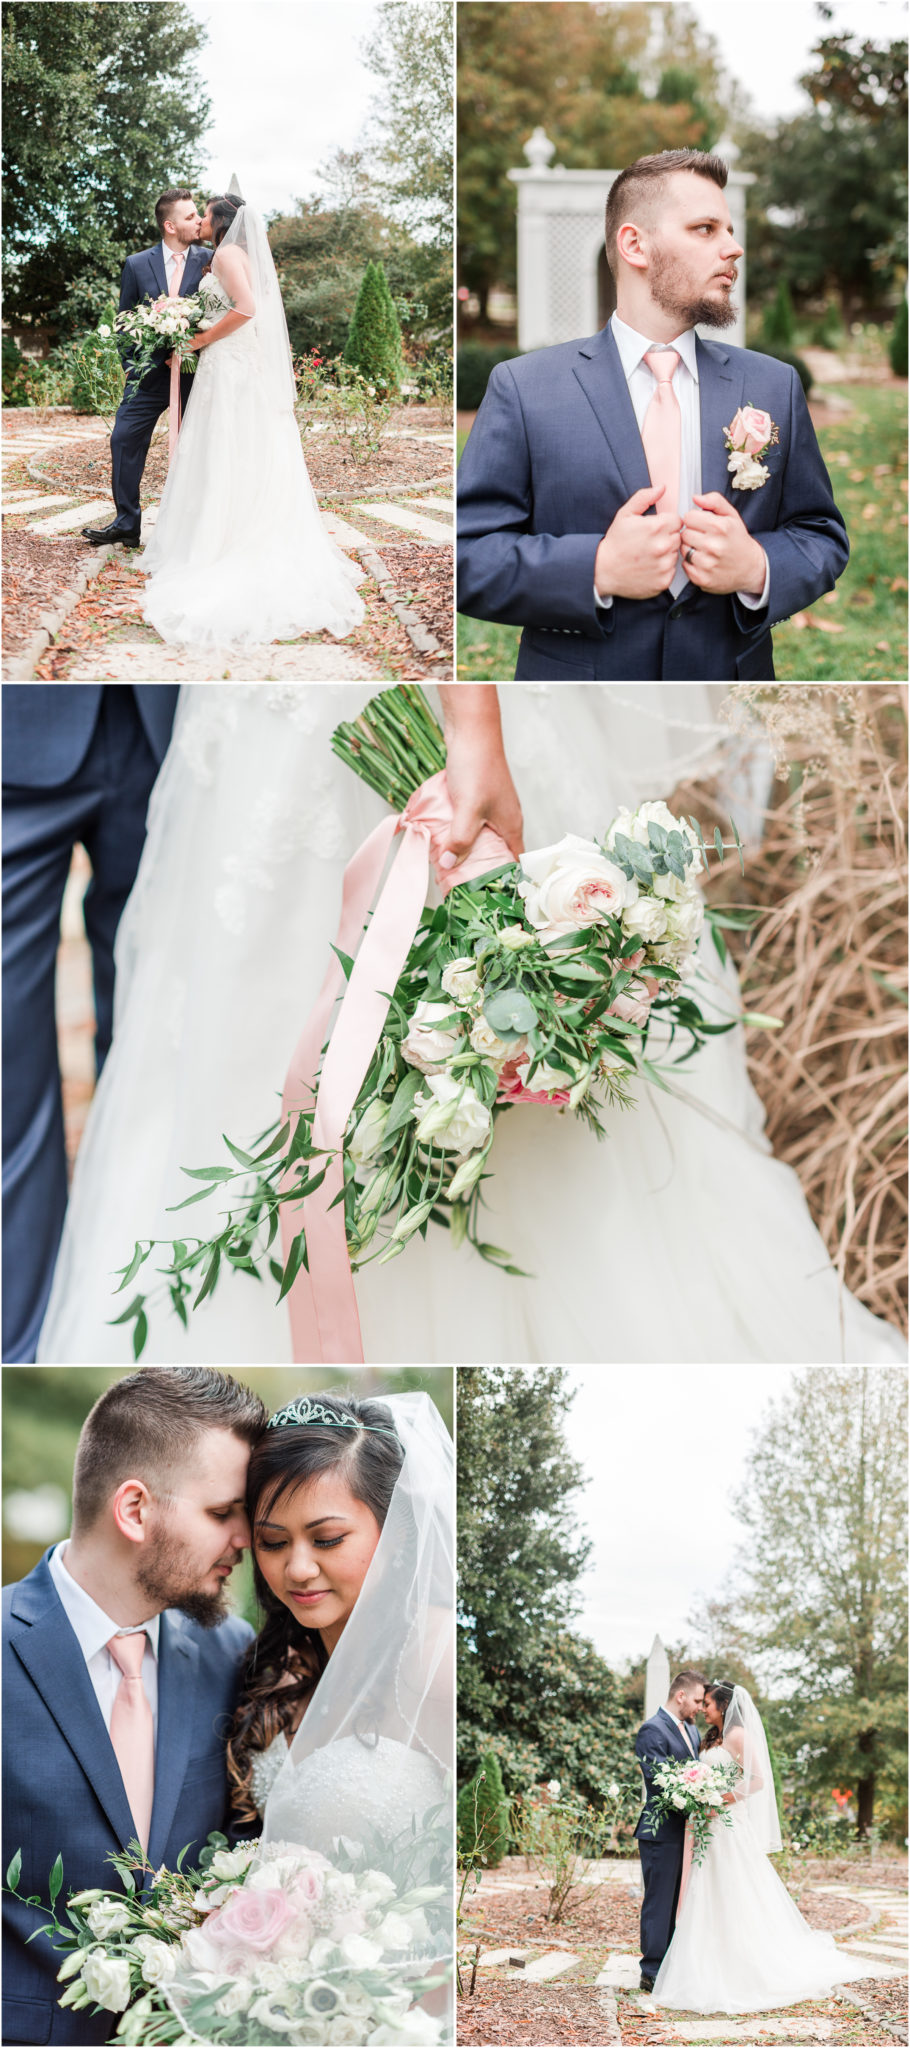 An Elegant Blush Wedding in Greenwood, SC Bride & Groom Photos